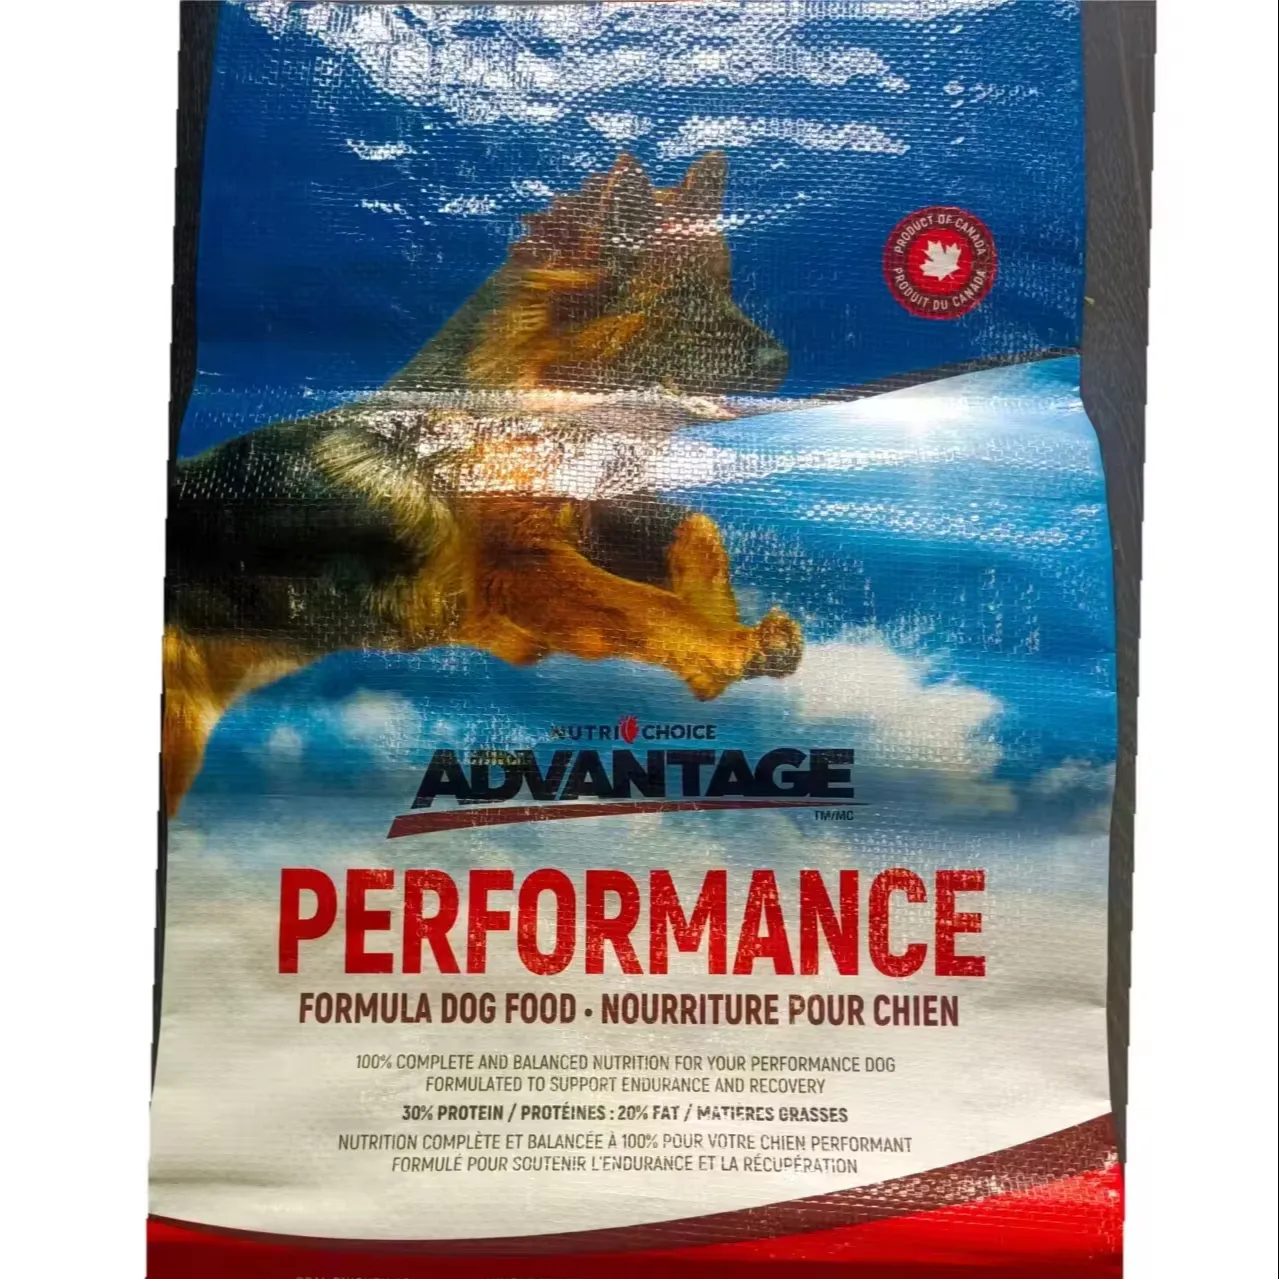 15kg/35lb pinch bottom bopp bags with bag back seal for horse/deer/rabbit/dog/cat food packing